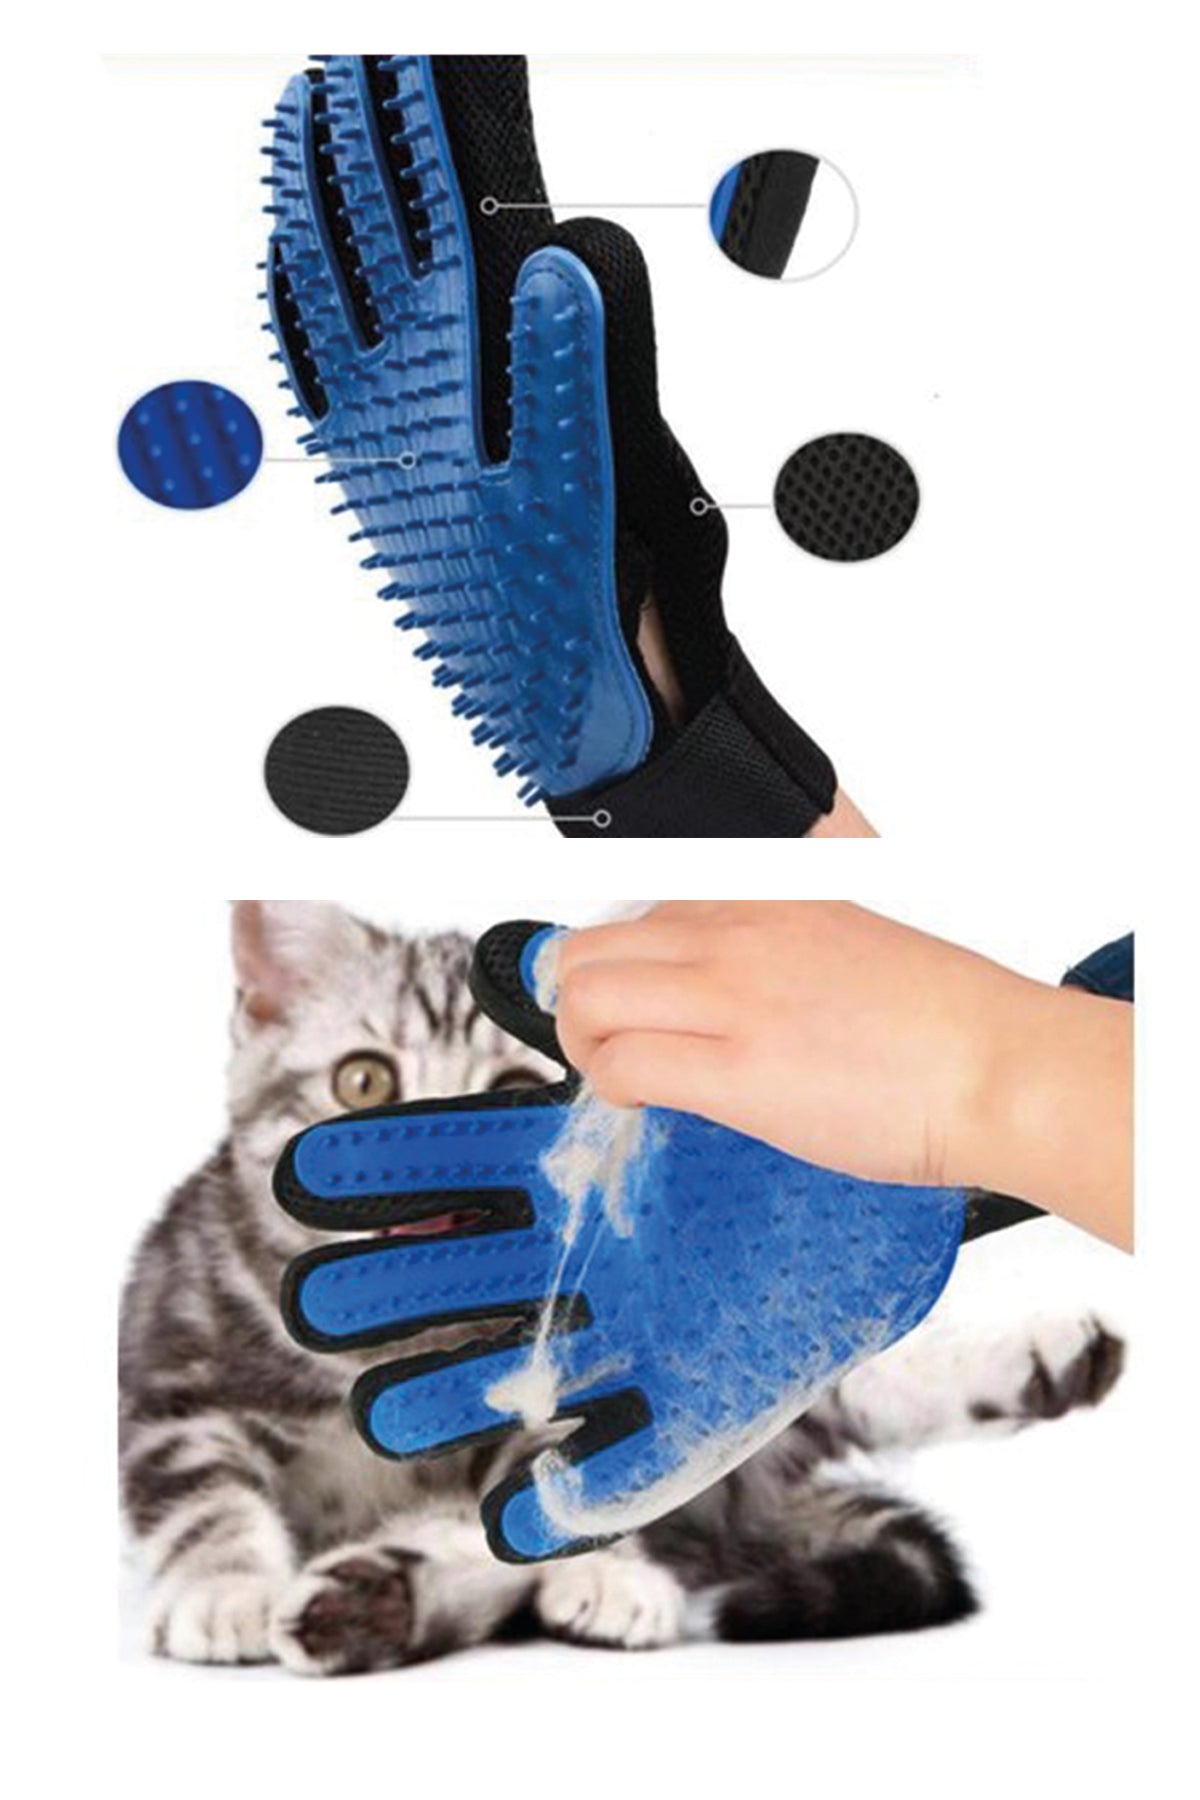 MUJGAN Pet Grooming Gloves Cat Brushes Gloves for Gentle Shedding